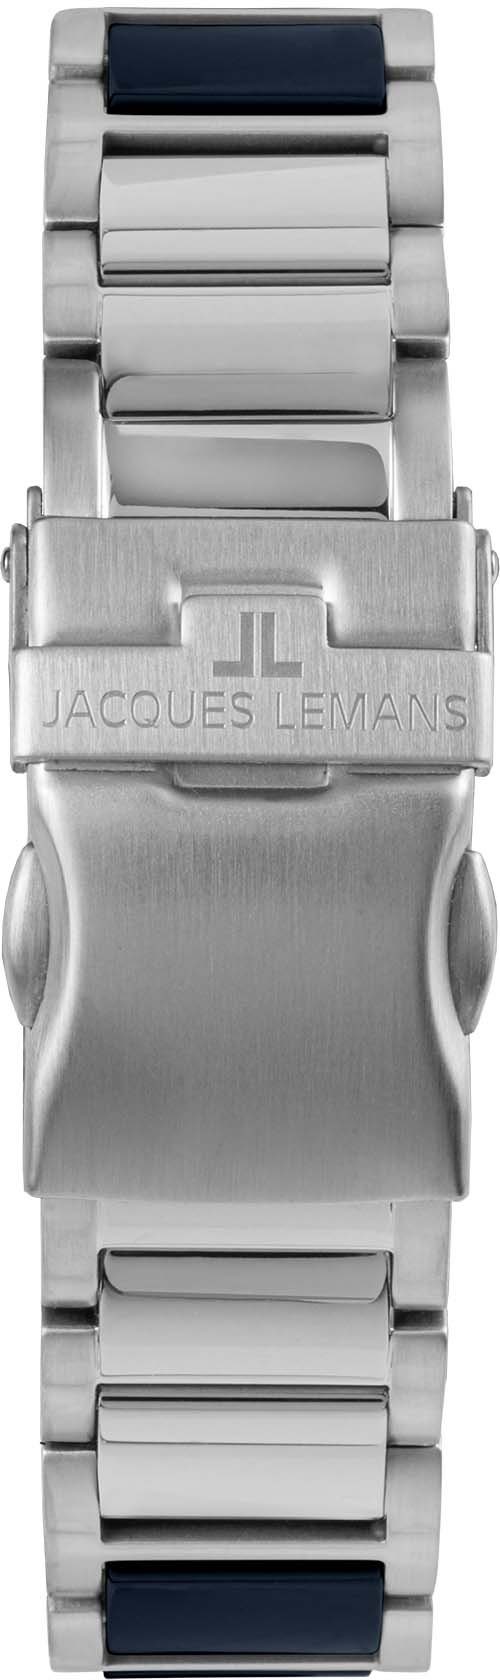 Jacques Keramikuhr Liverpool, Lemans 42-10B